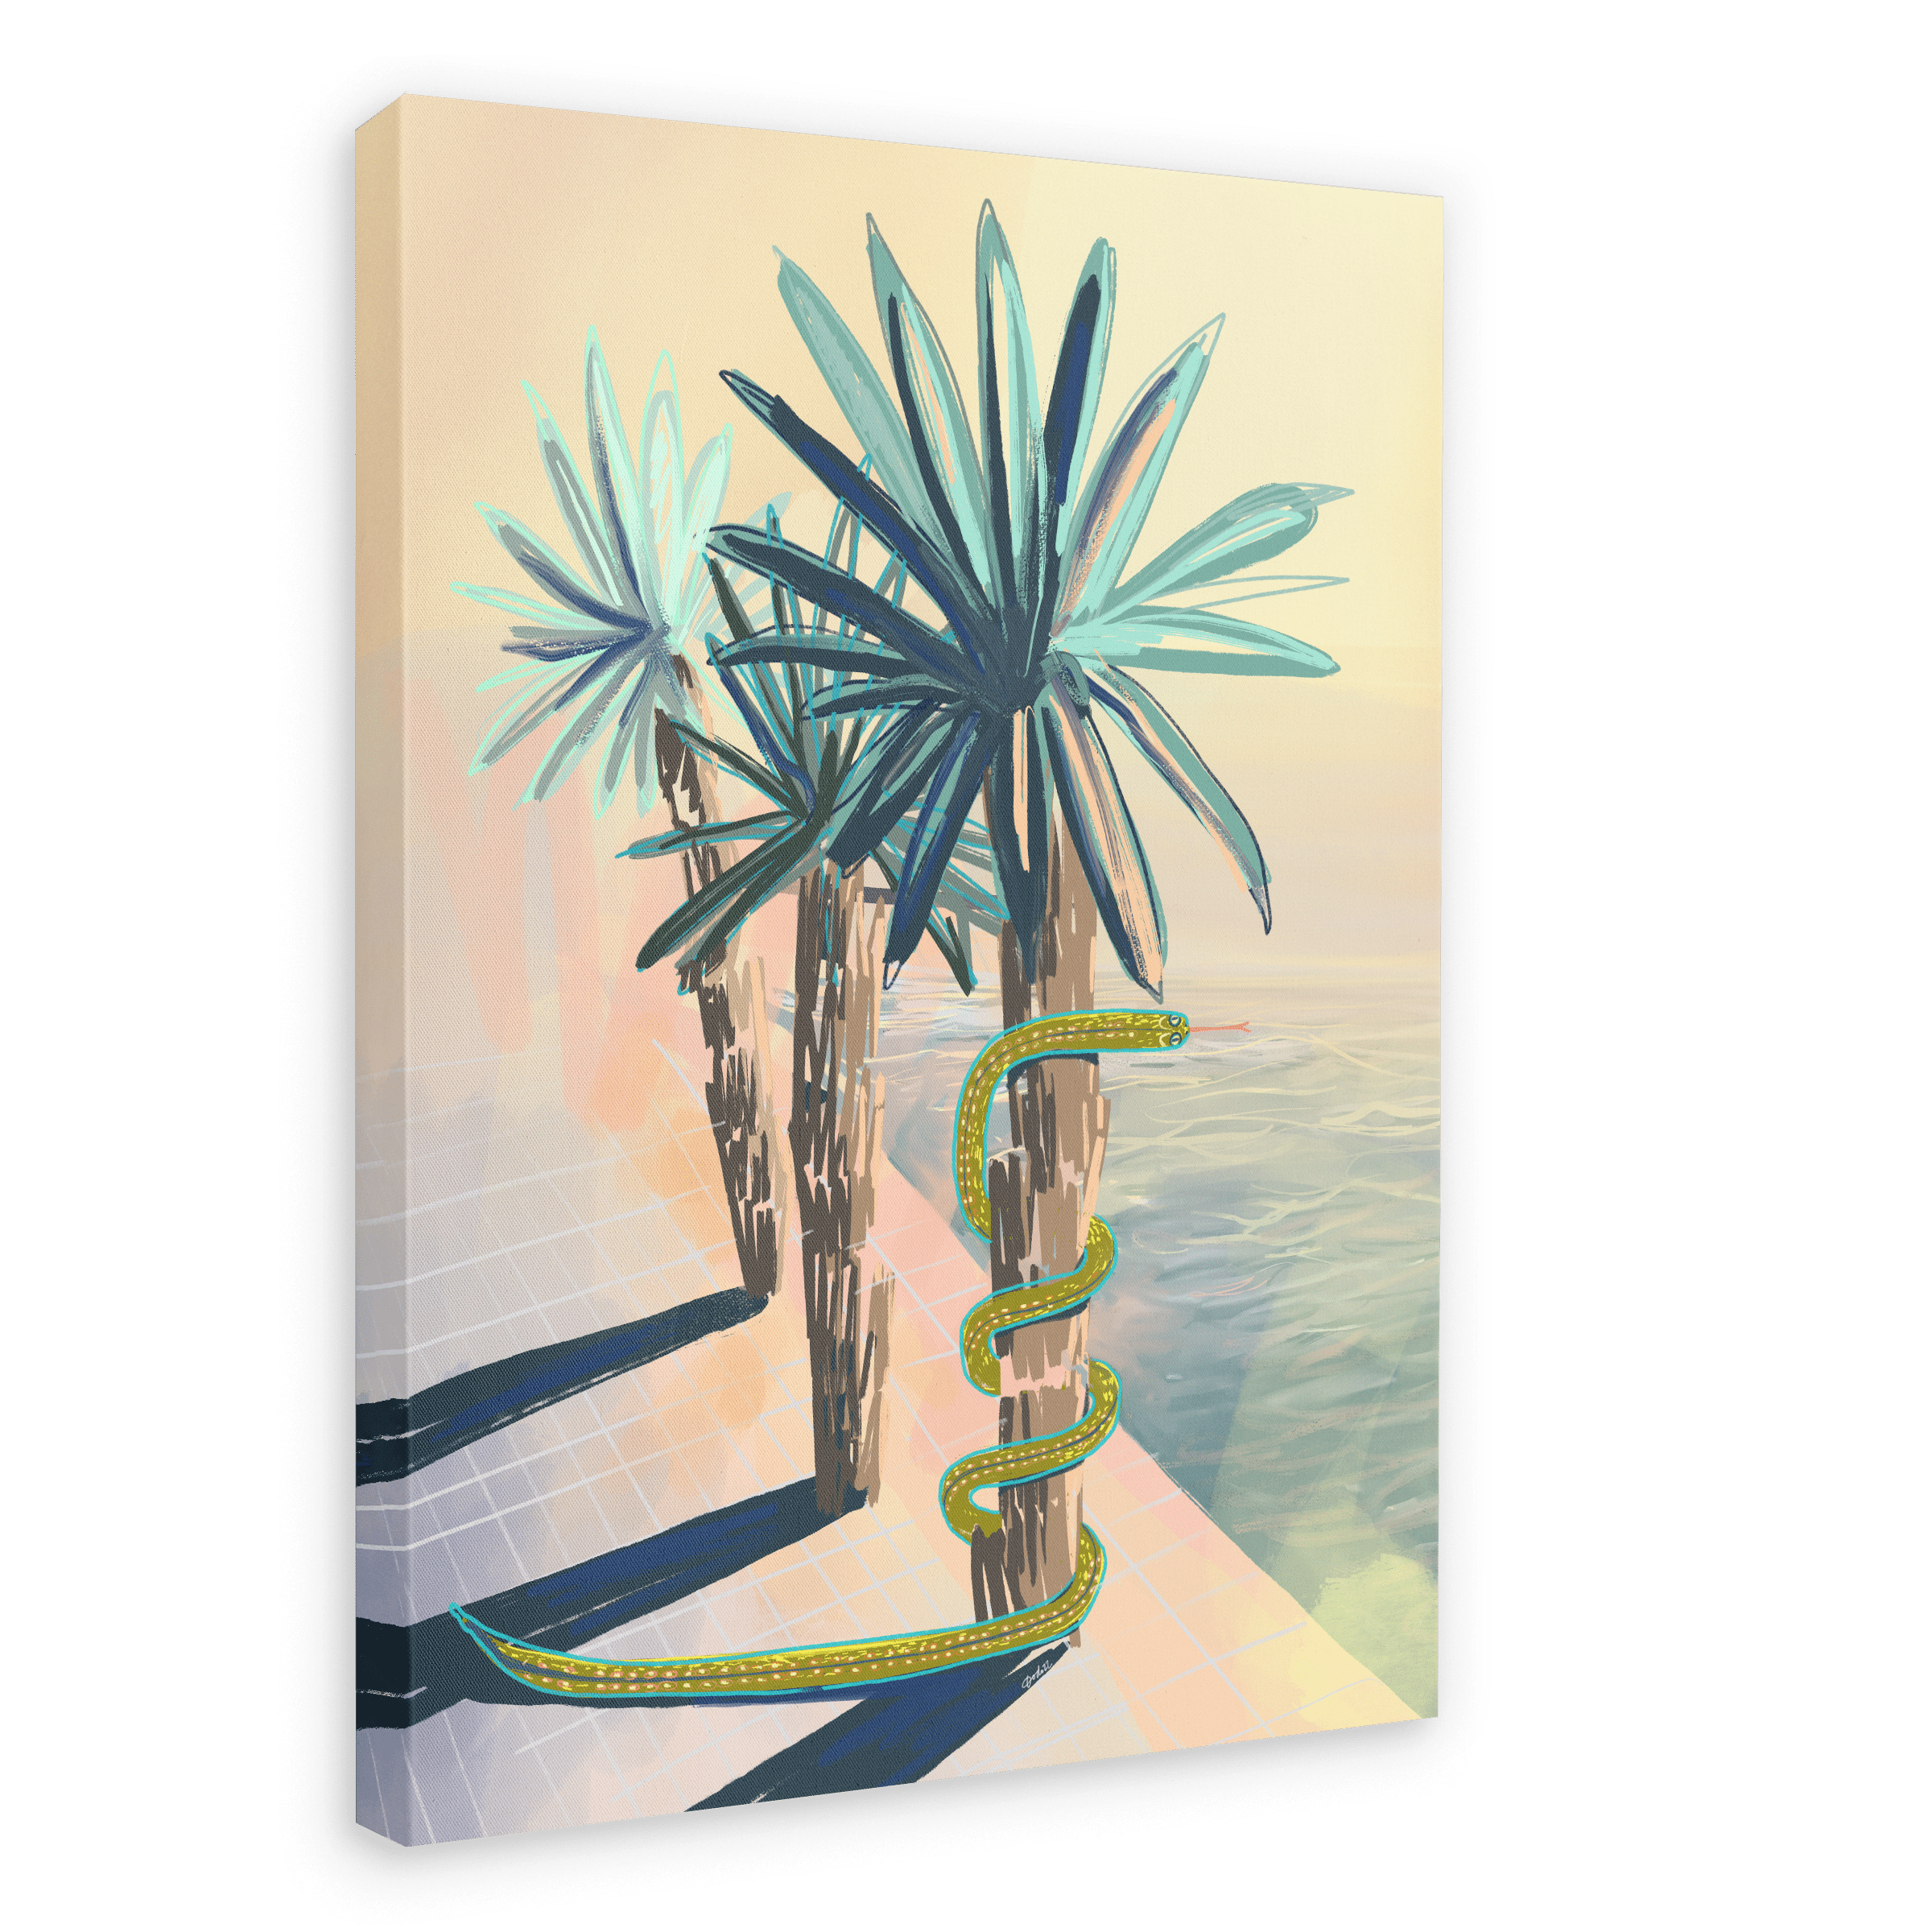 Poolside Promenade (with friendly snake) Giclée Canvas Print Palmy Days 28"x40"(70x100 cm) Canvas Print